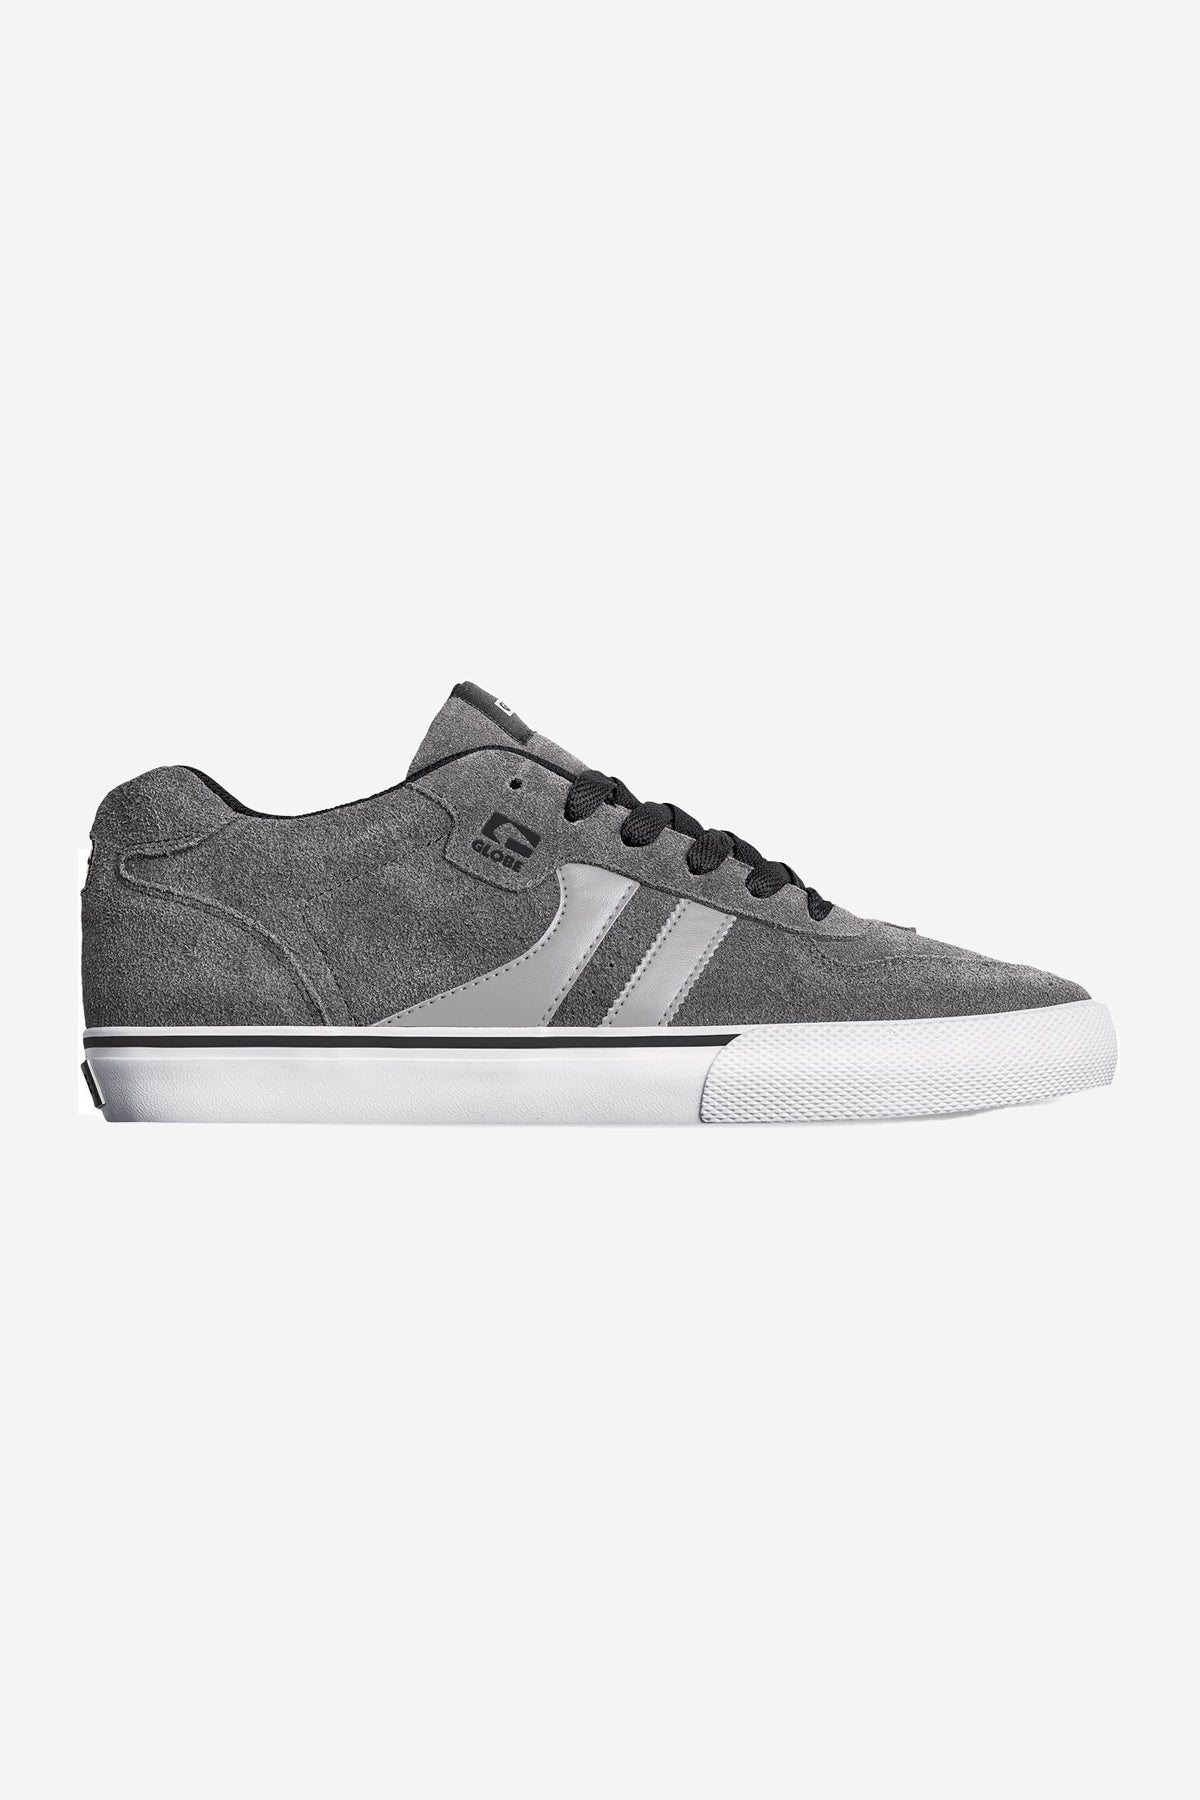 encore-2 charcoal grey skate shoes